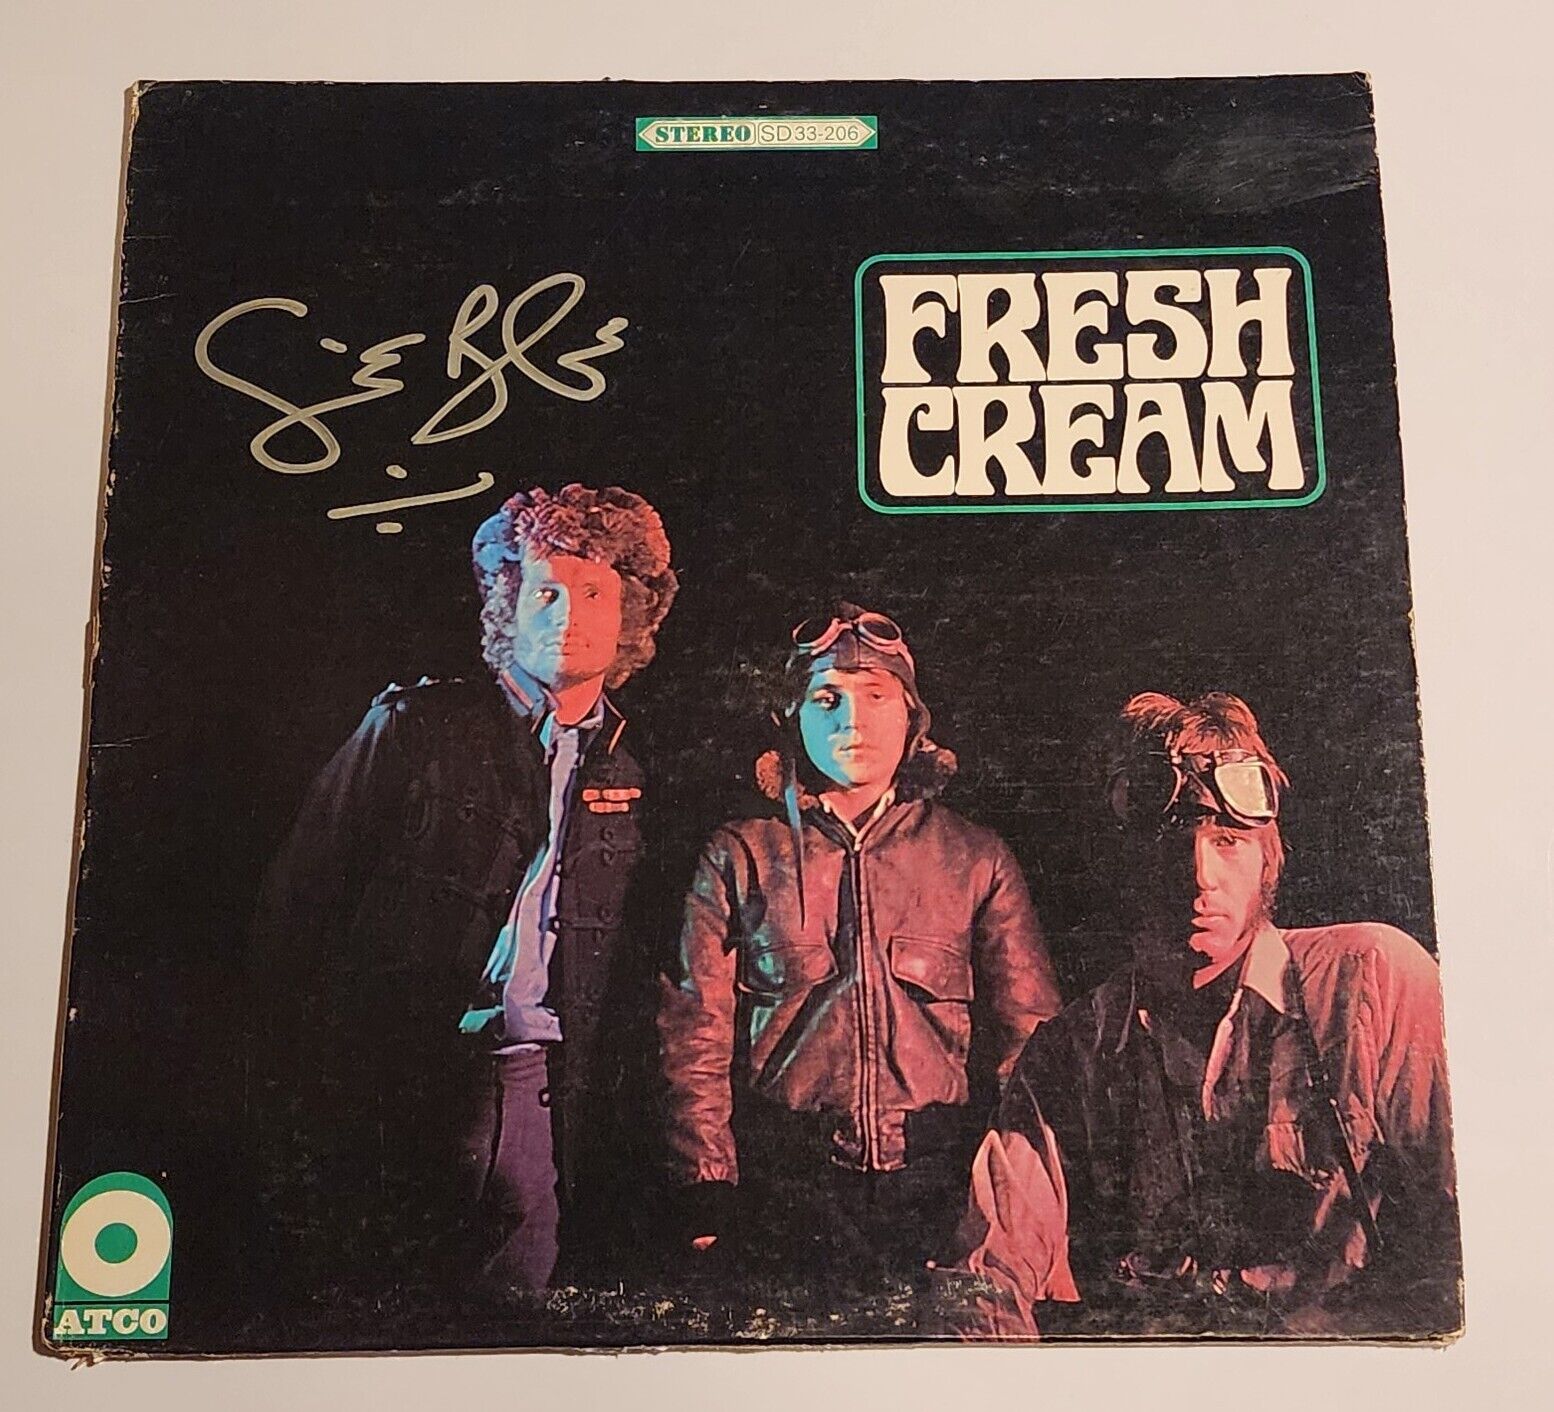 Ginger Baker Signed Record Cover JSA musician autograph auto Cream Drummer COA